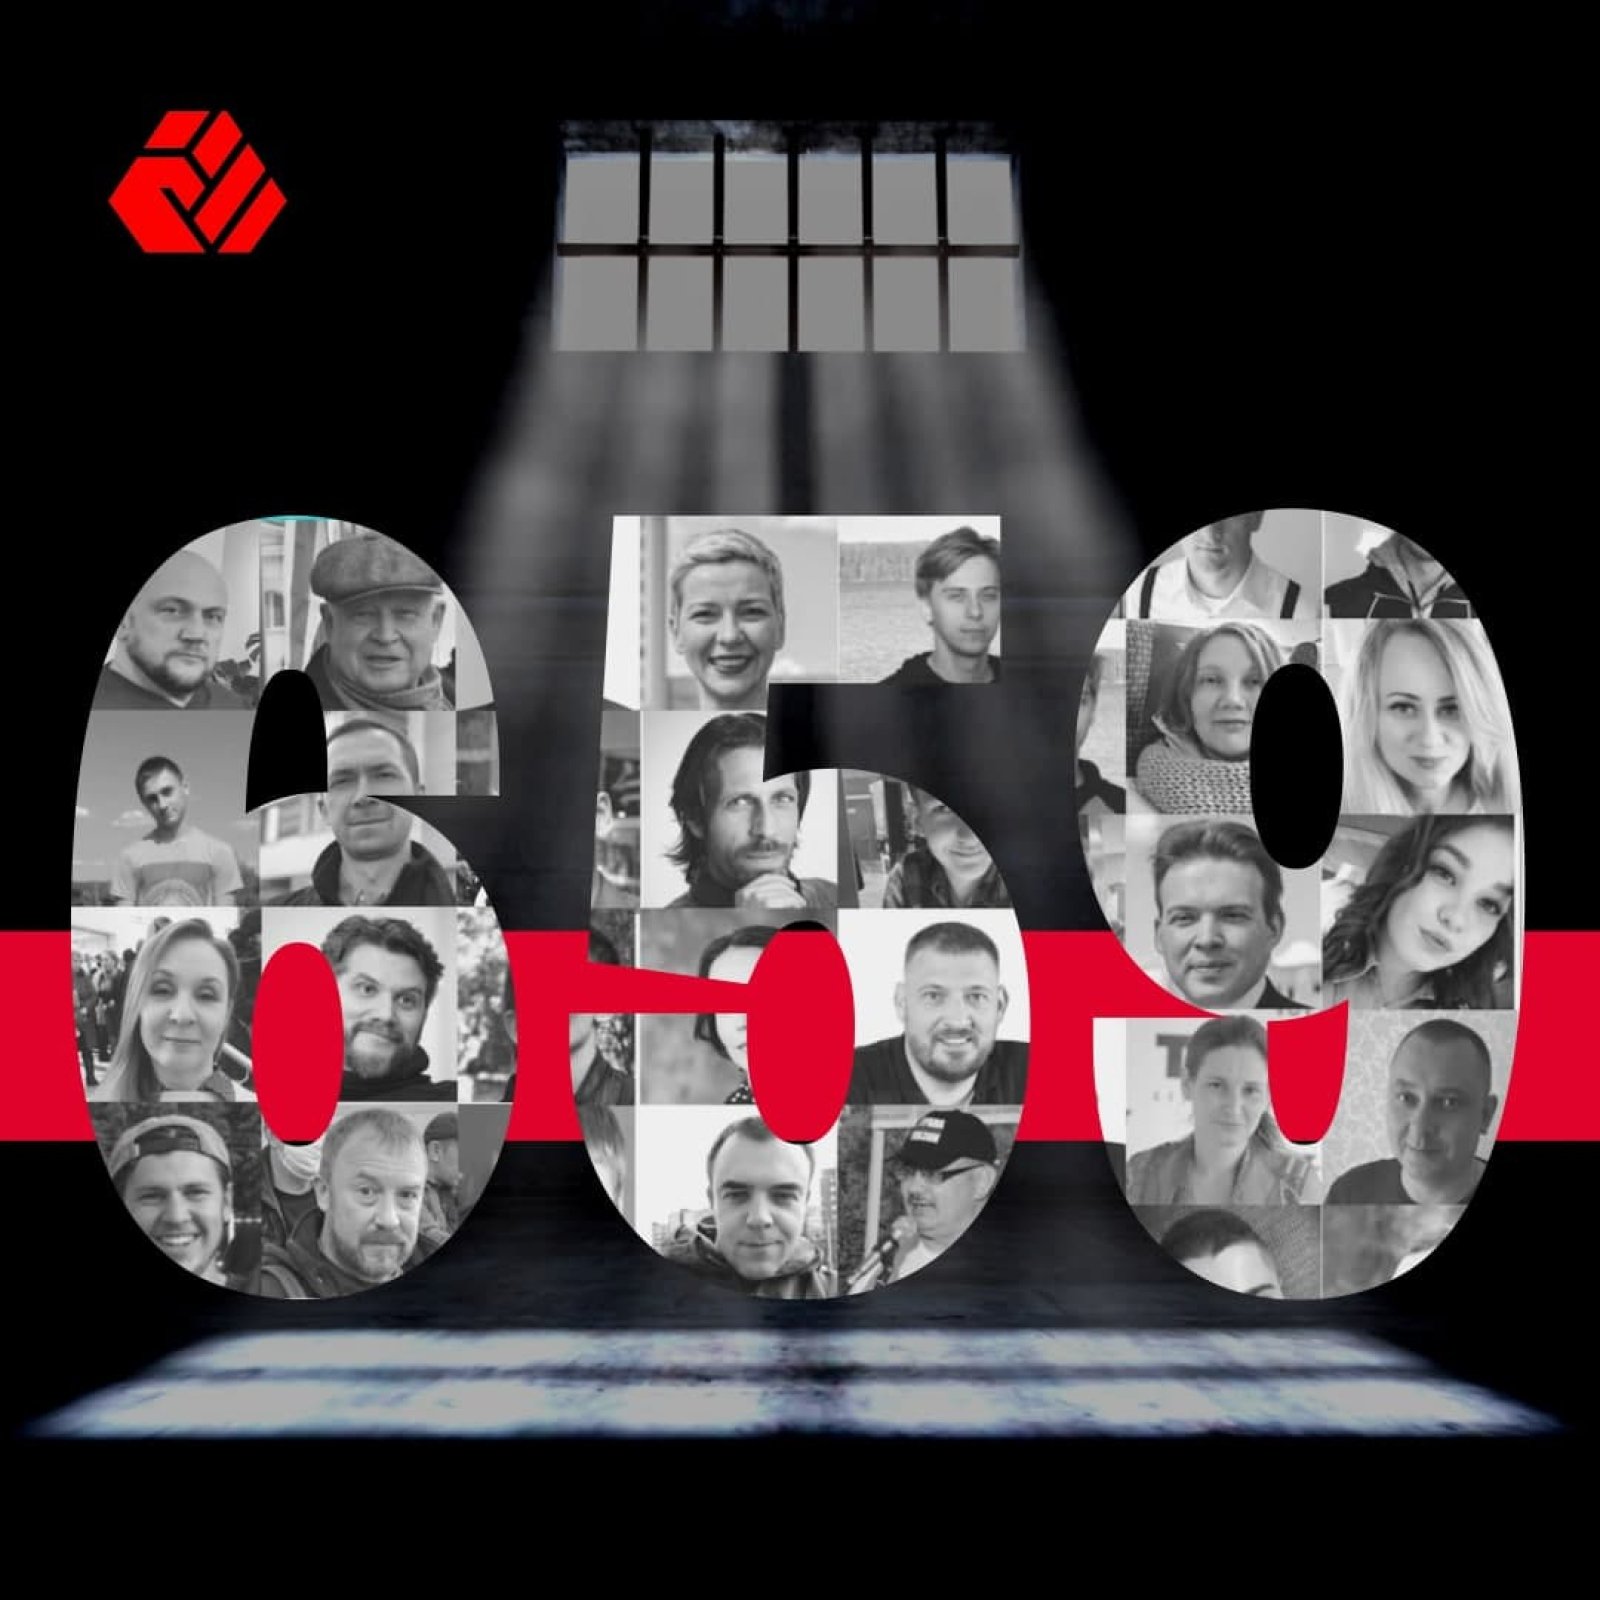 659 political prisoners in Belarus